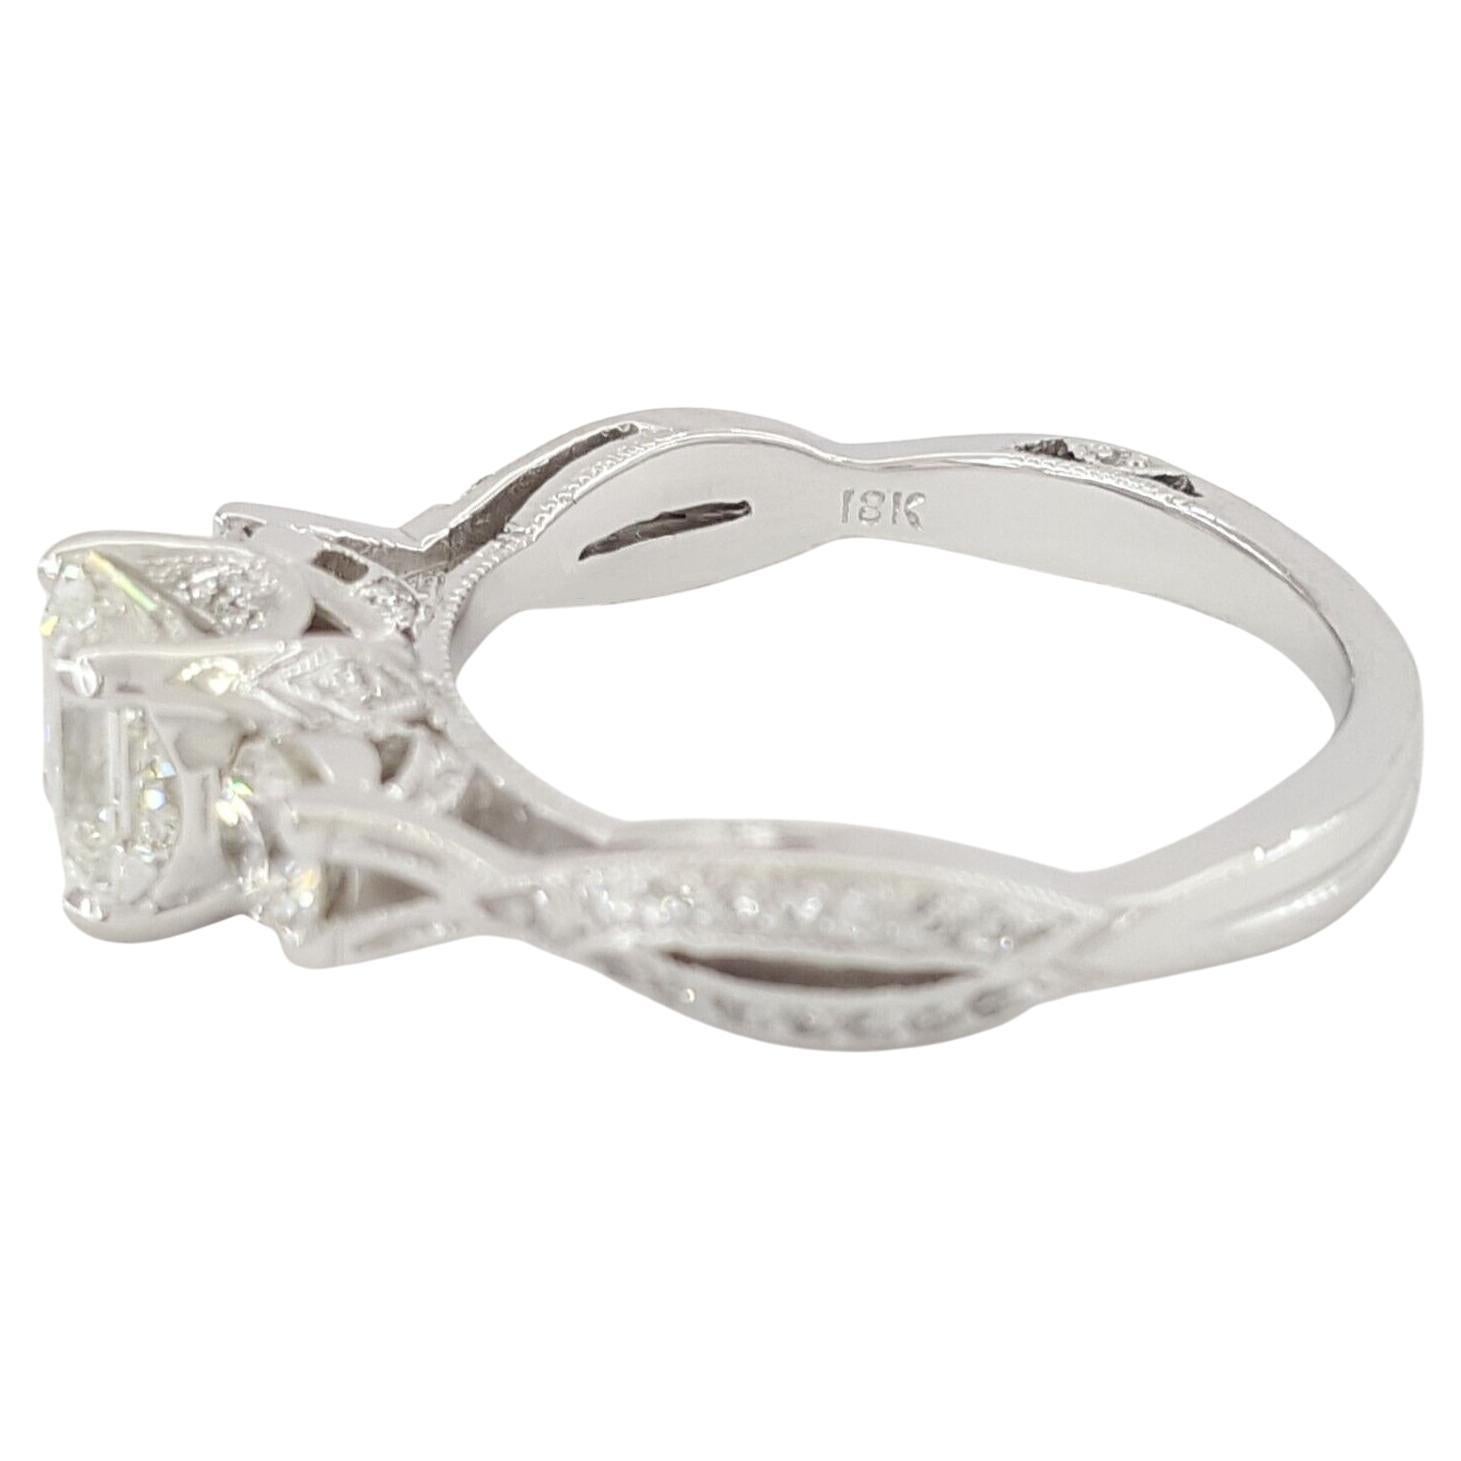  TACORI 18K White Gold Simply Tacori 1.56 ct Asscher Cut Diamond 3-Stone Engagement Ring 




